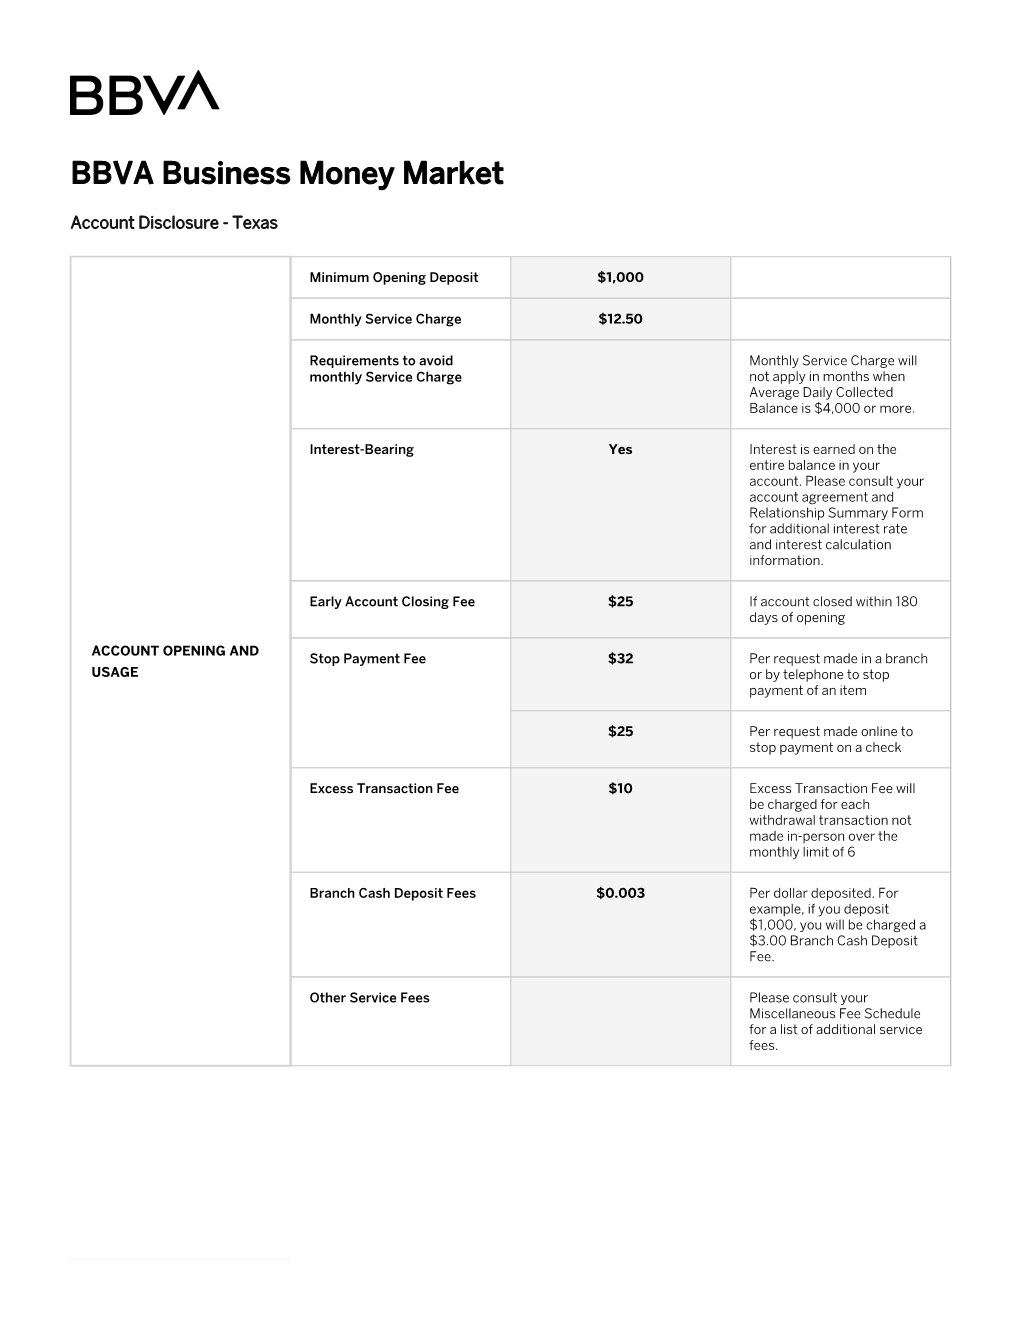 BBVA Business Money Market Account Disclosure | Texas